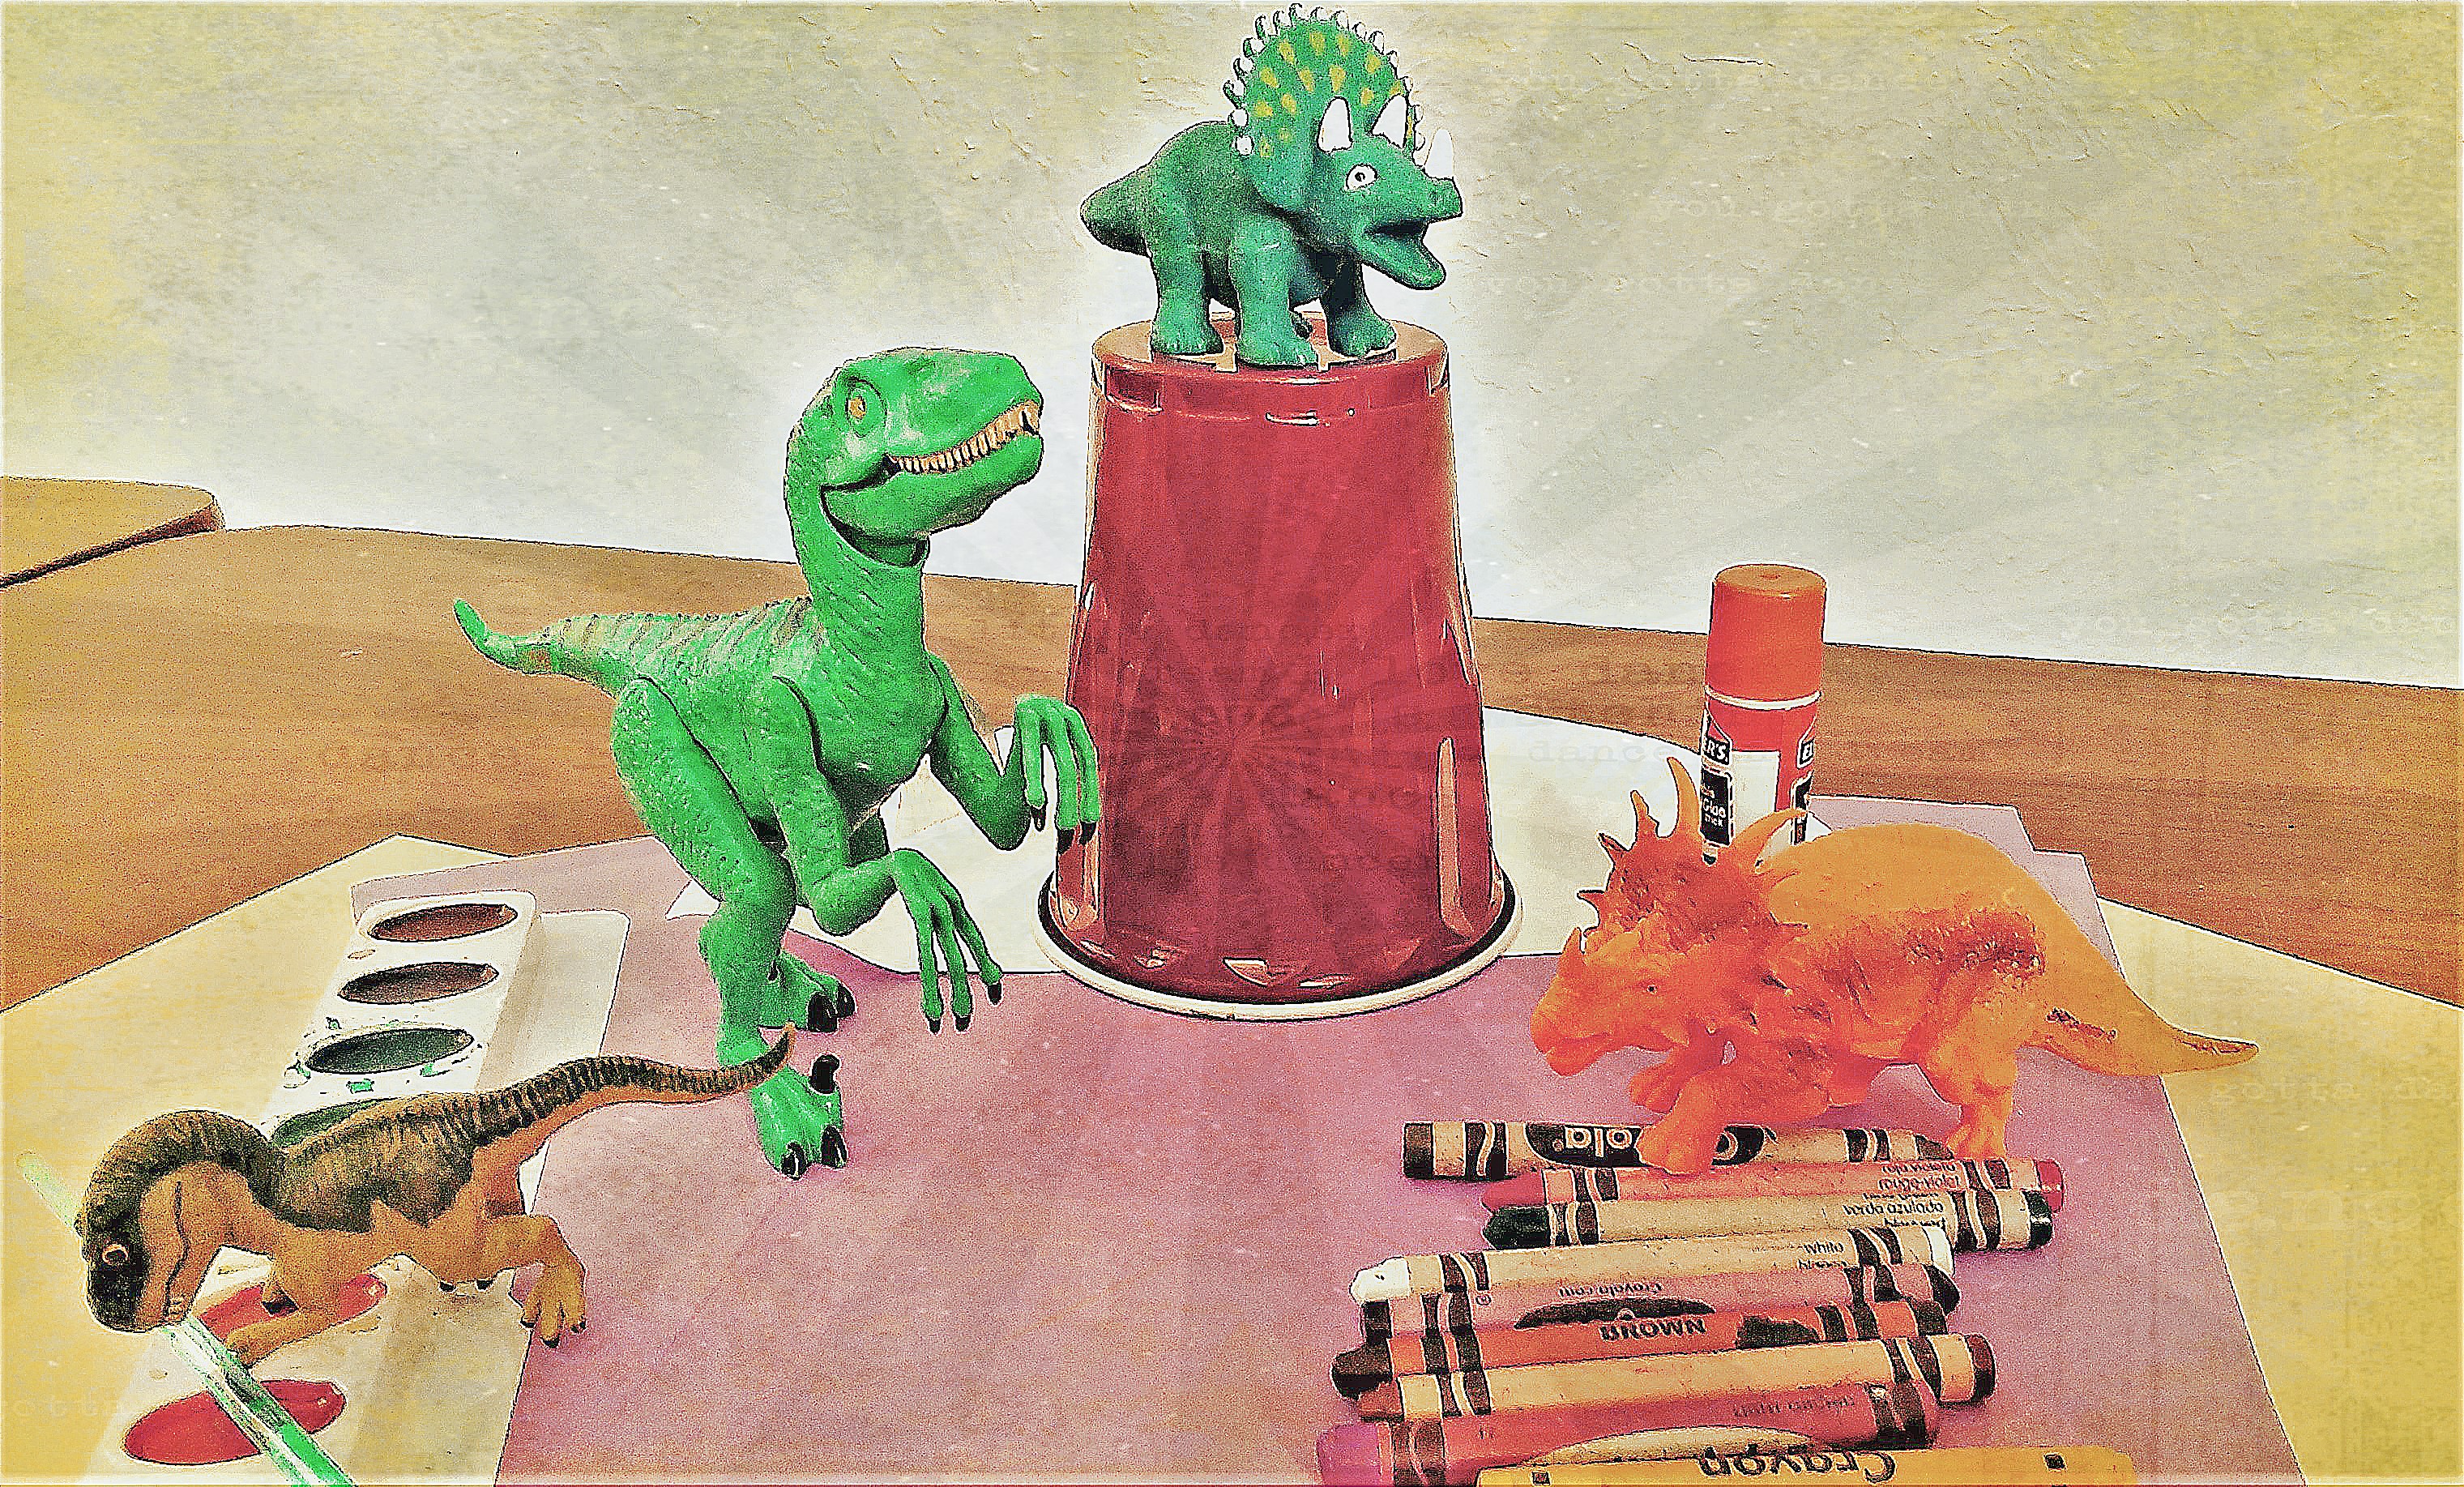 October is Dinosaur Month!